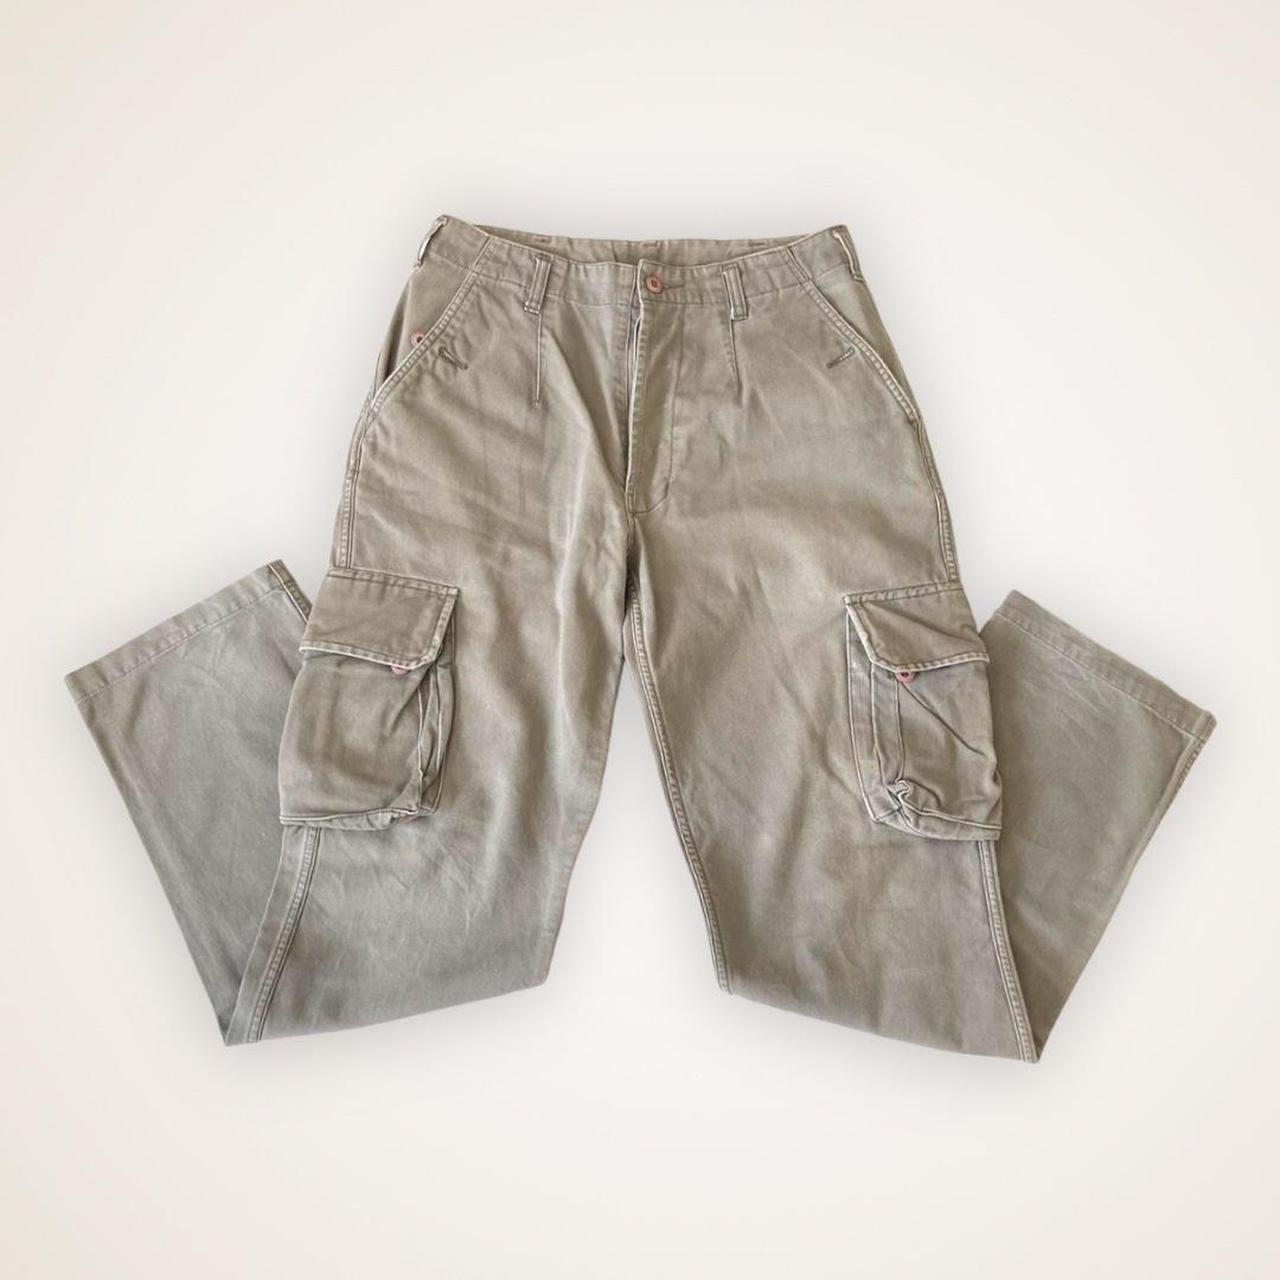 Product Image 1 - Caterpillar cargo pants durable outwear